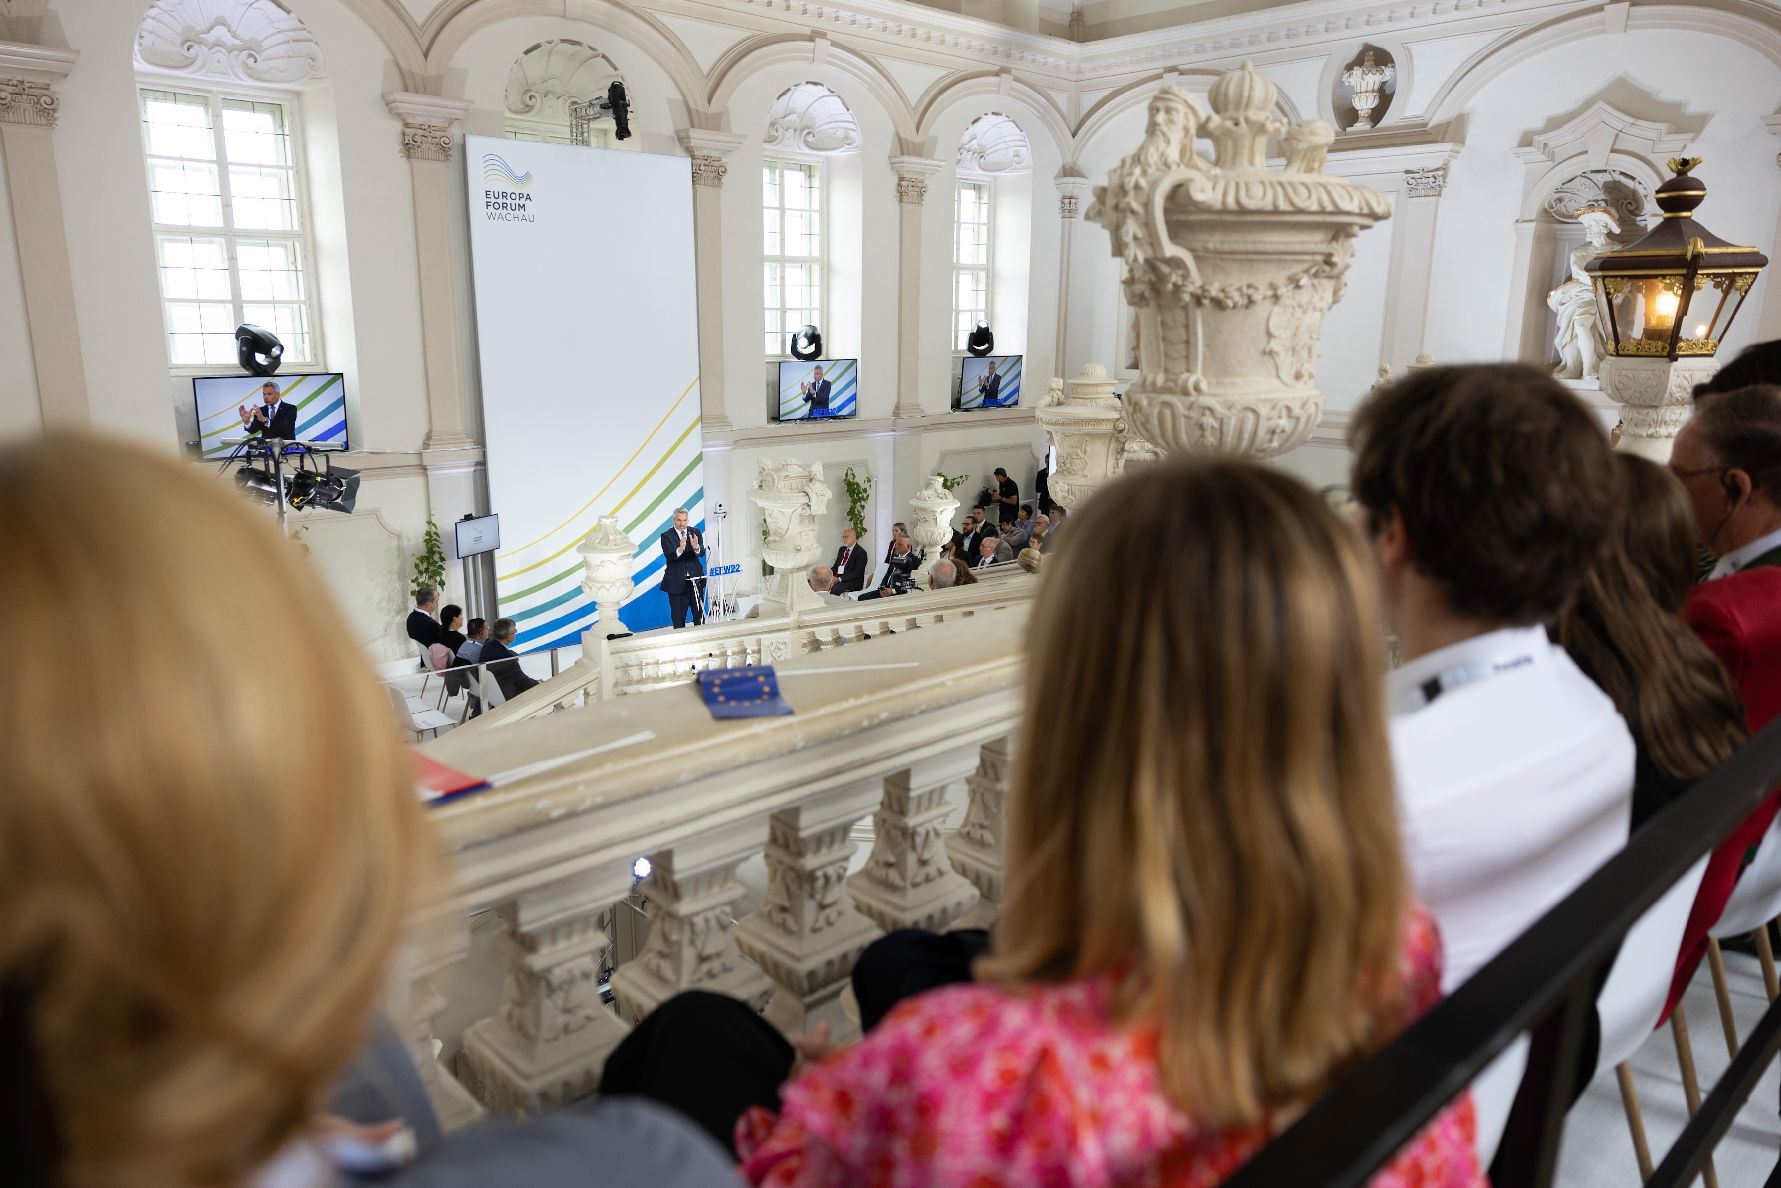 Am 25. Juni 2022 nahm Bundeskanzler Karl Nehammer am Europa-Forum Wachau teil.